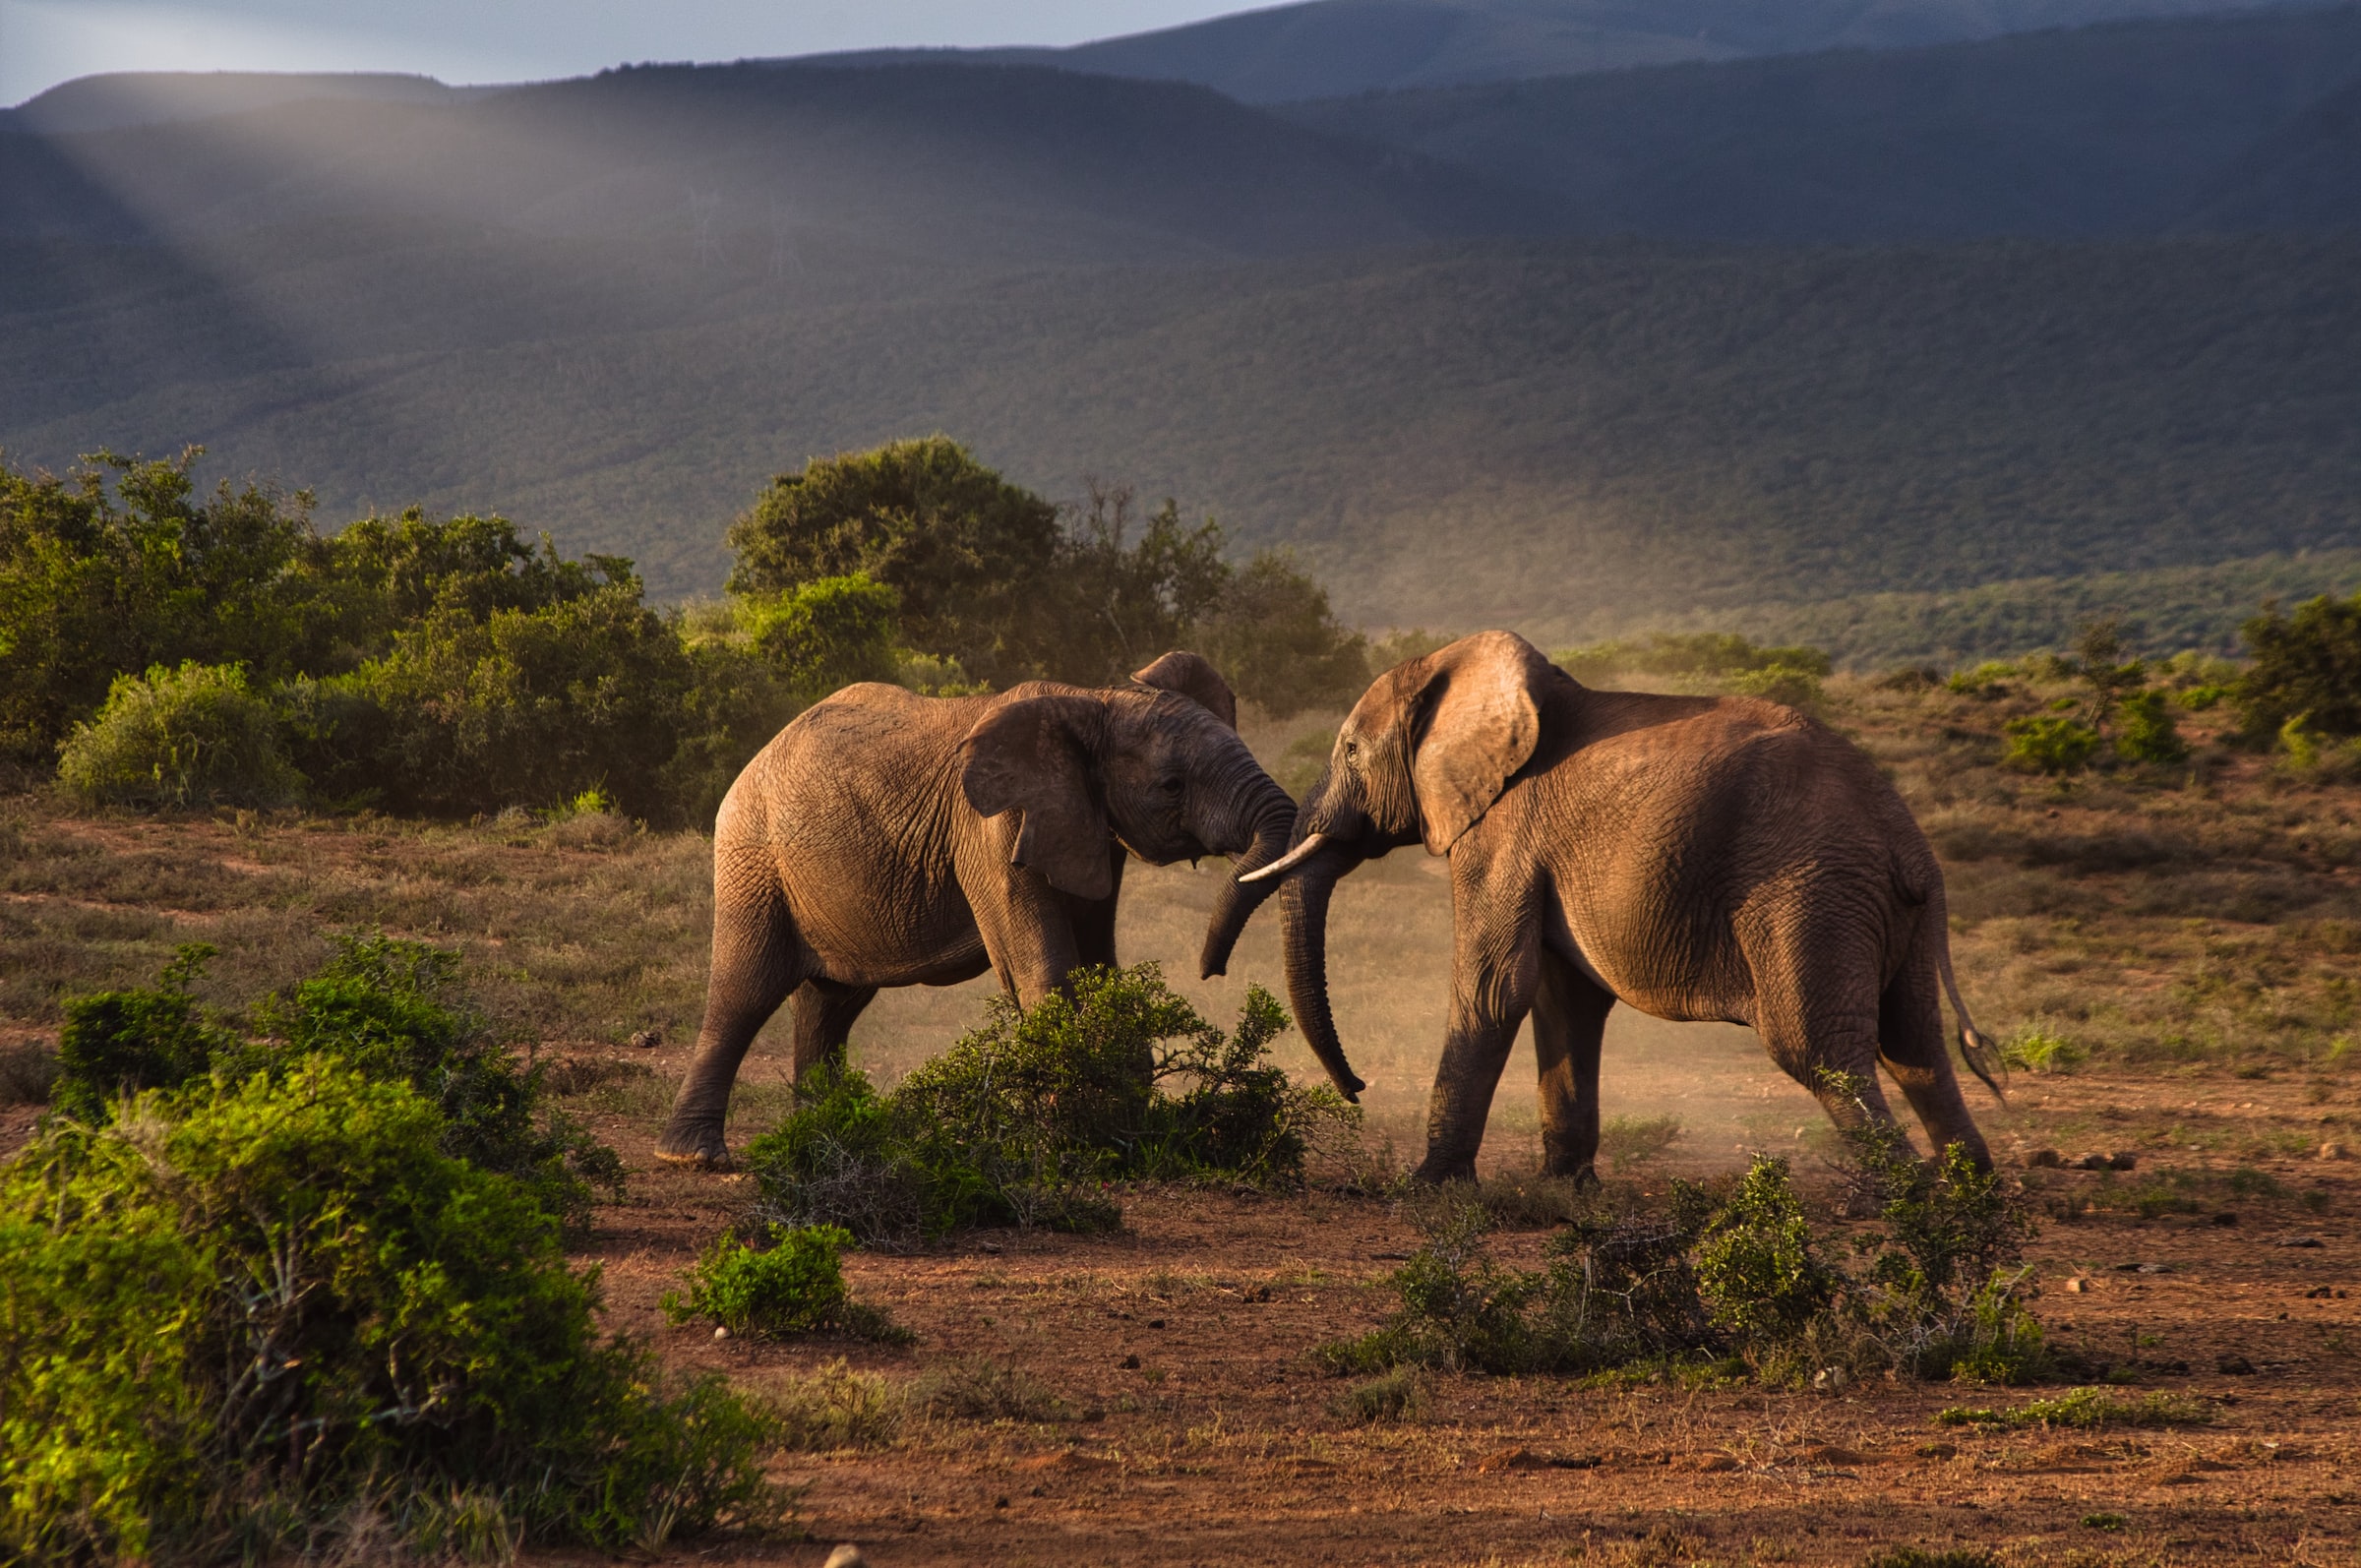 Two elephant fightning in a safari